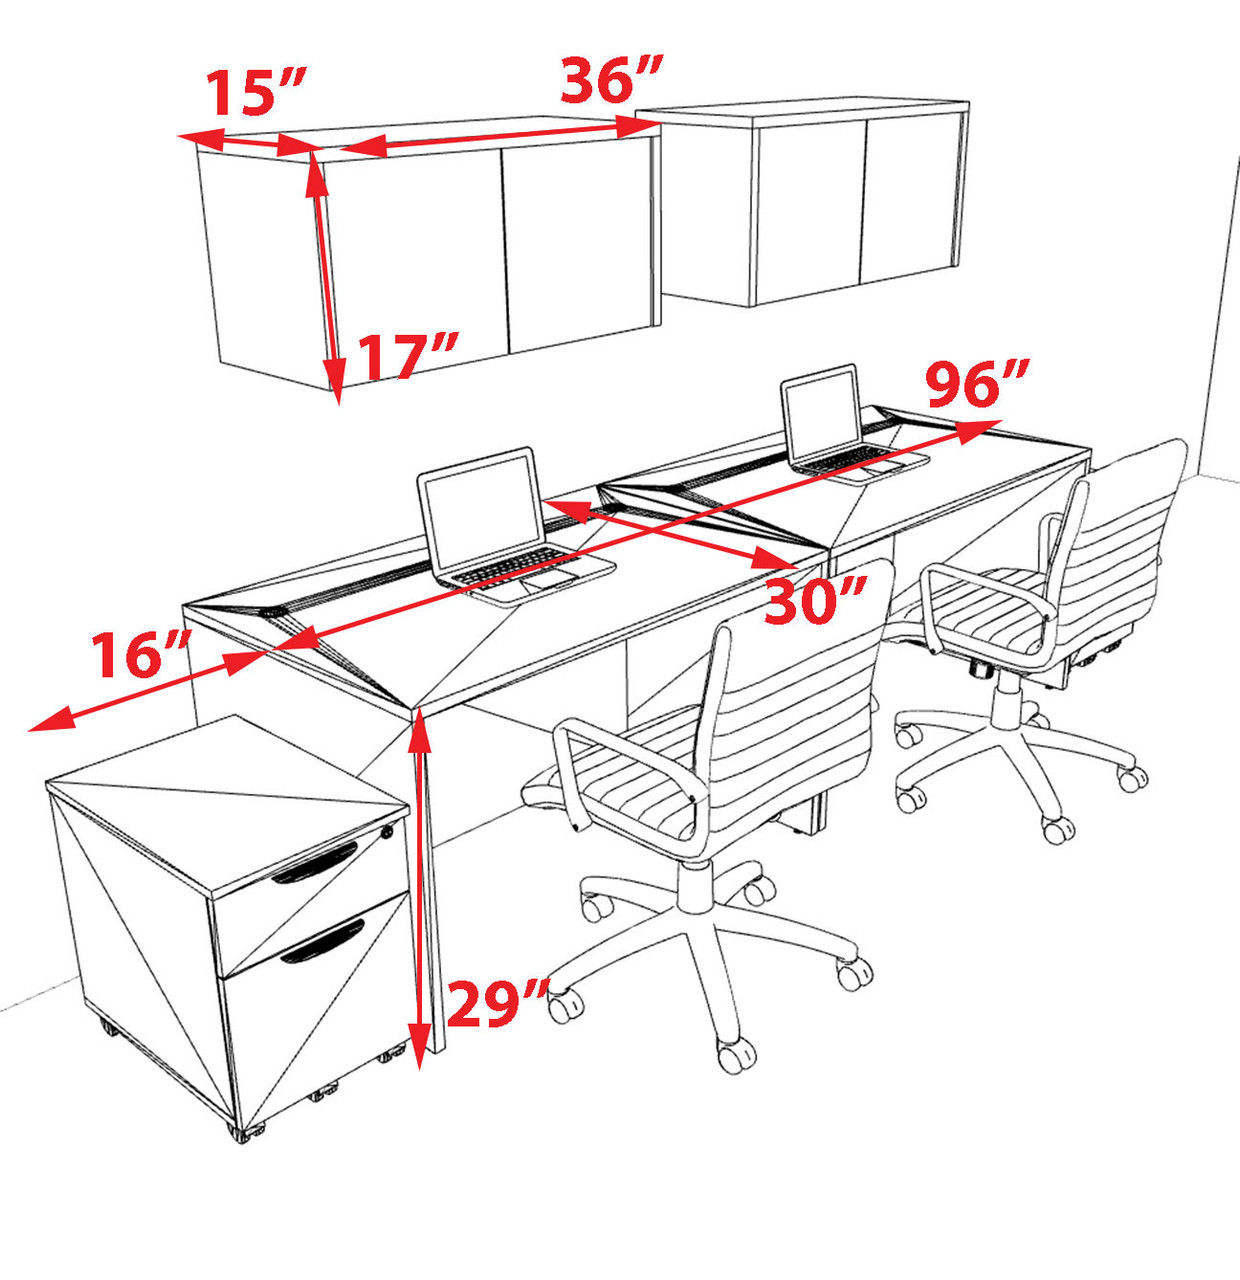 Two Person Modern No Panel Office Workstation Desk Set, #OT-SUS-SPN47